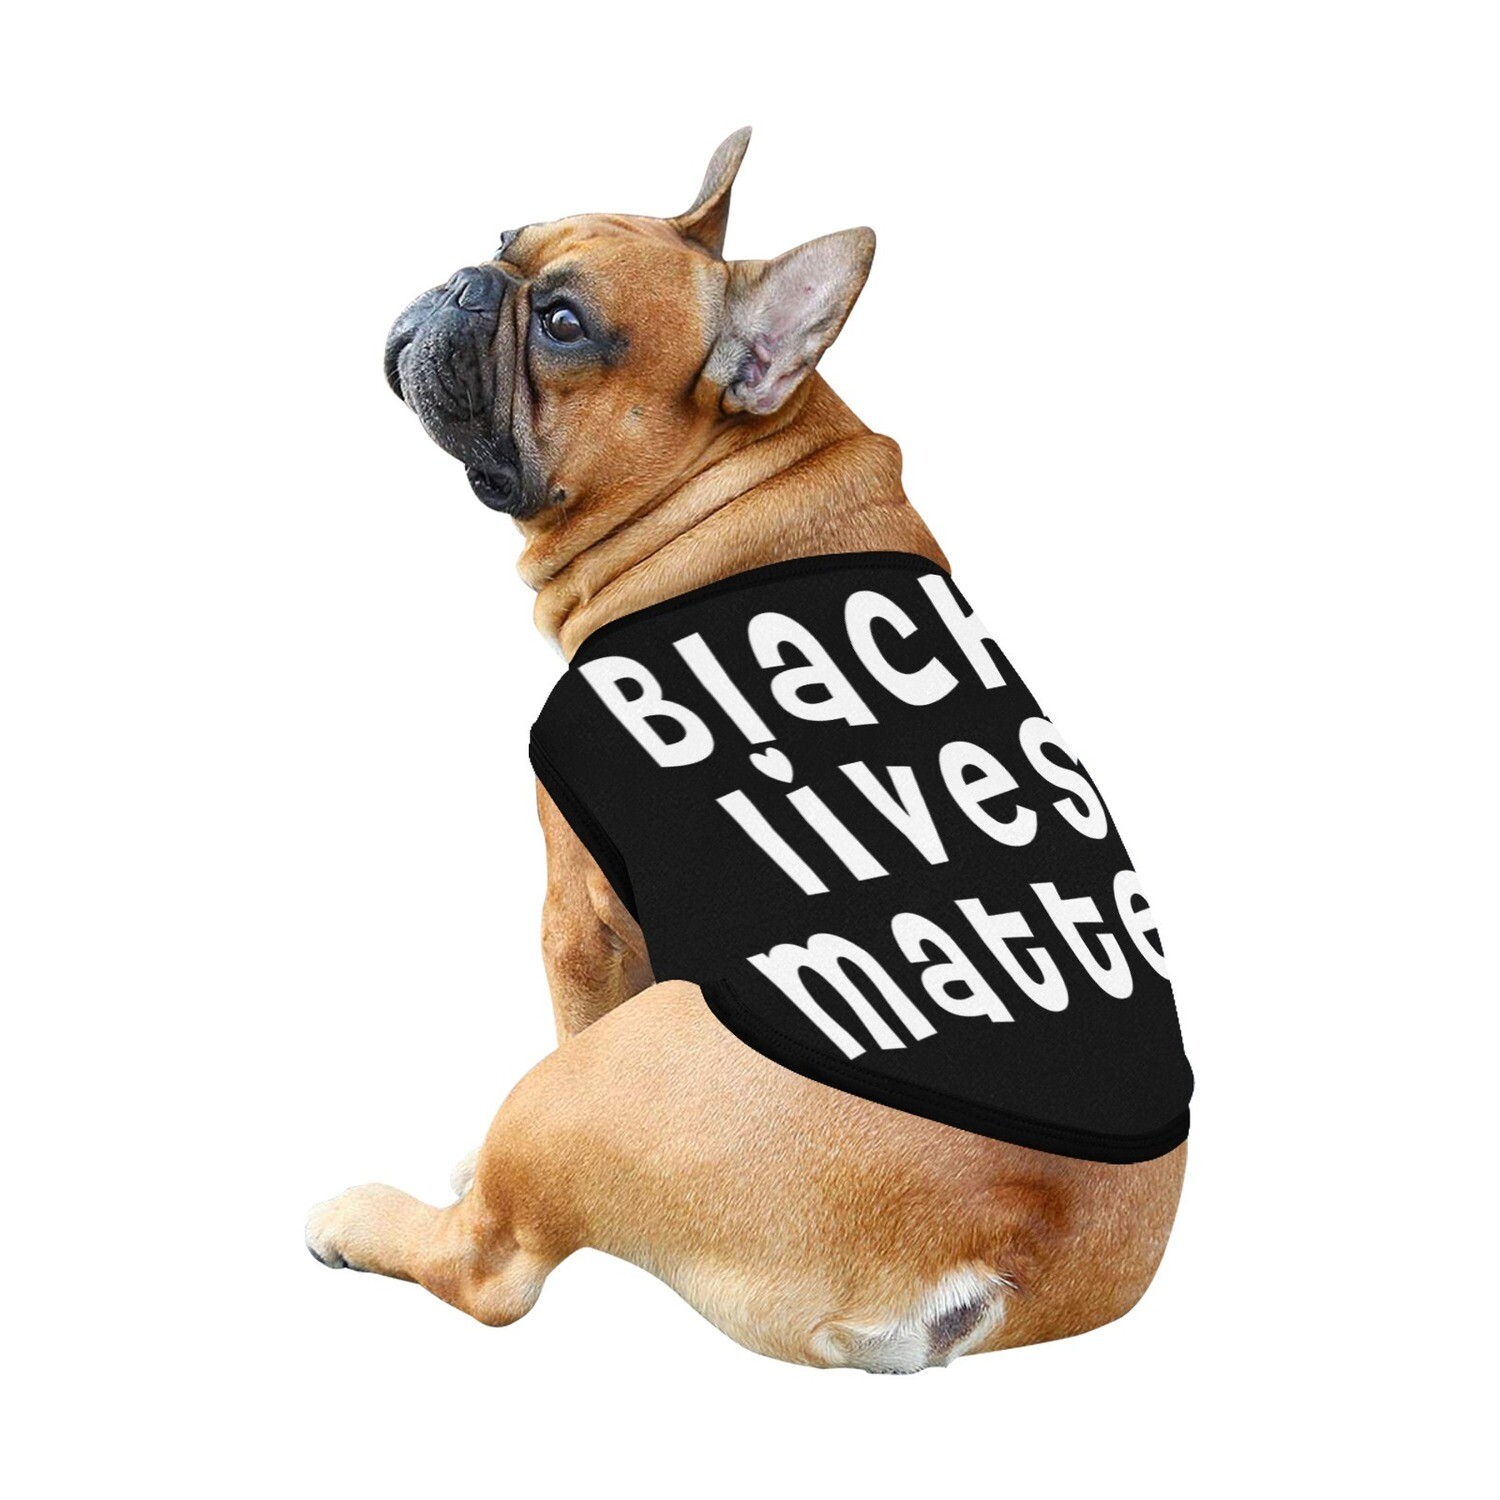 🐕 ✊🏽 Black lives Matter dog shirt, dog tank top, dog t-shirt, dog clothes, Gift, 7 sizes XS to 3XL, black and white, heart